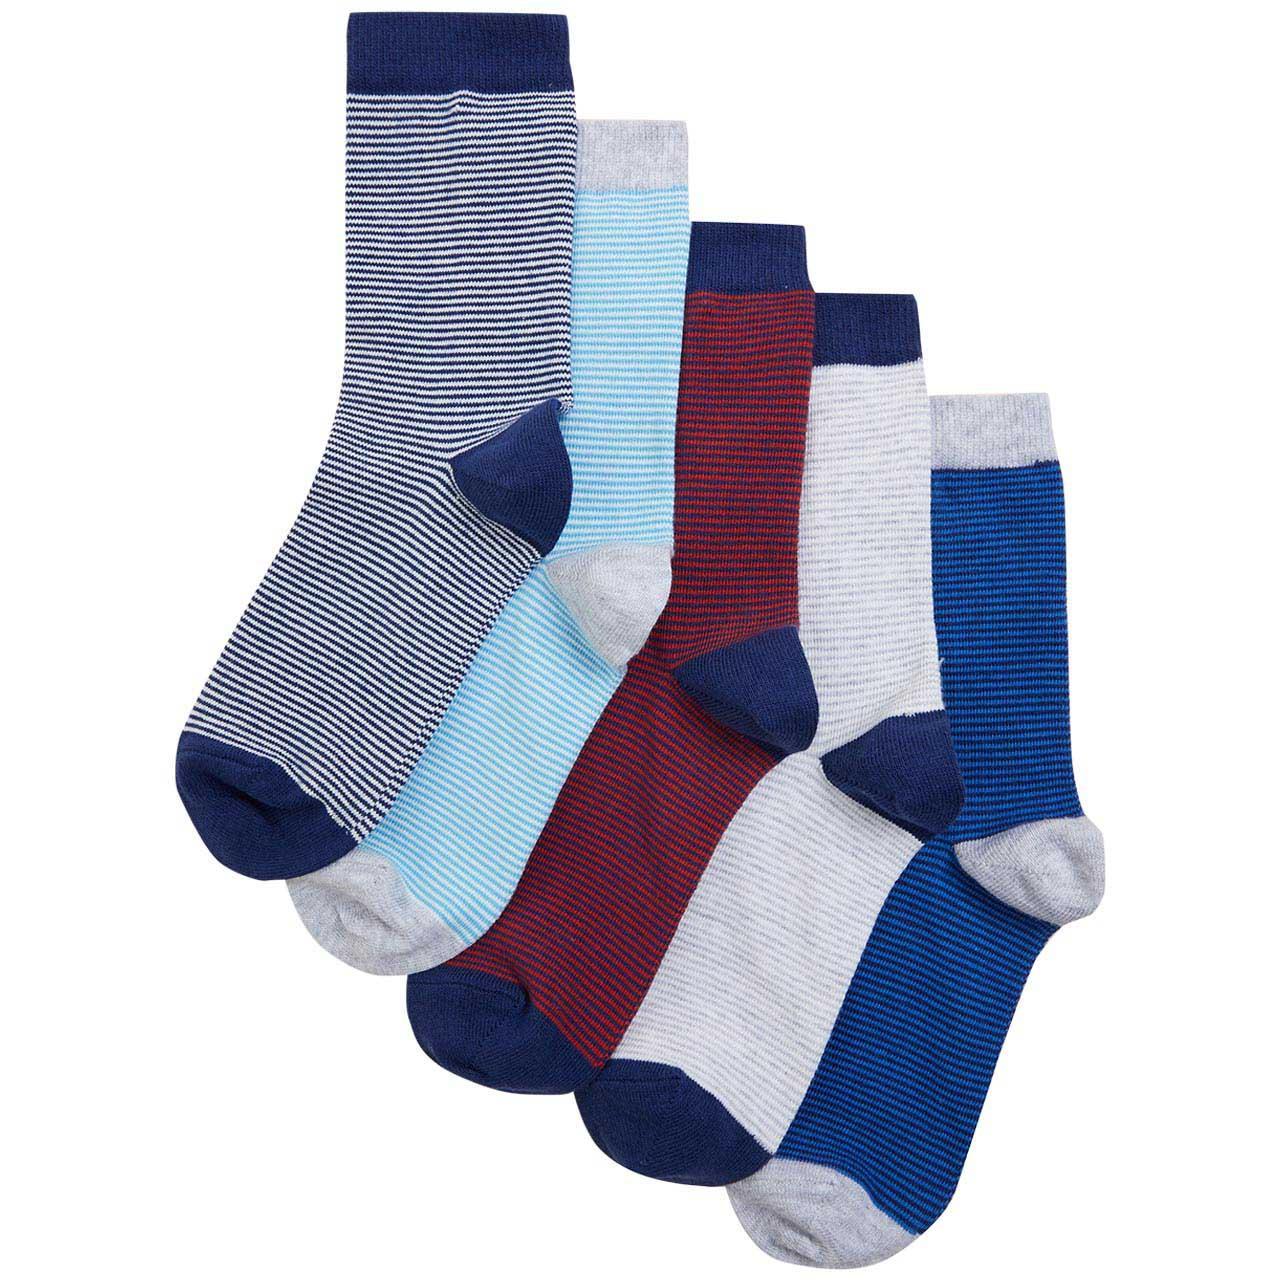 M&S Cotton Rich Striped Socks, 5 pack, 8-12 